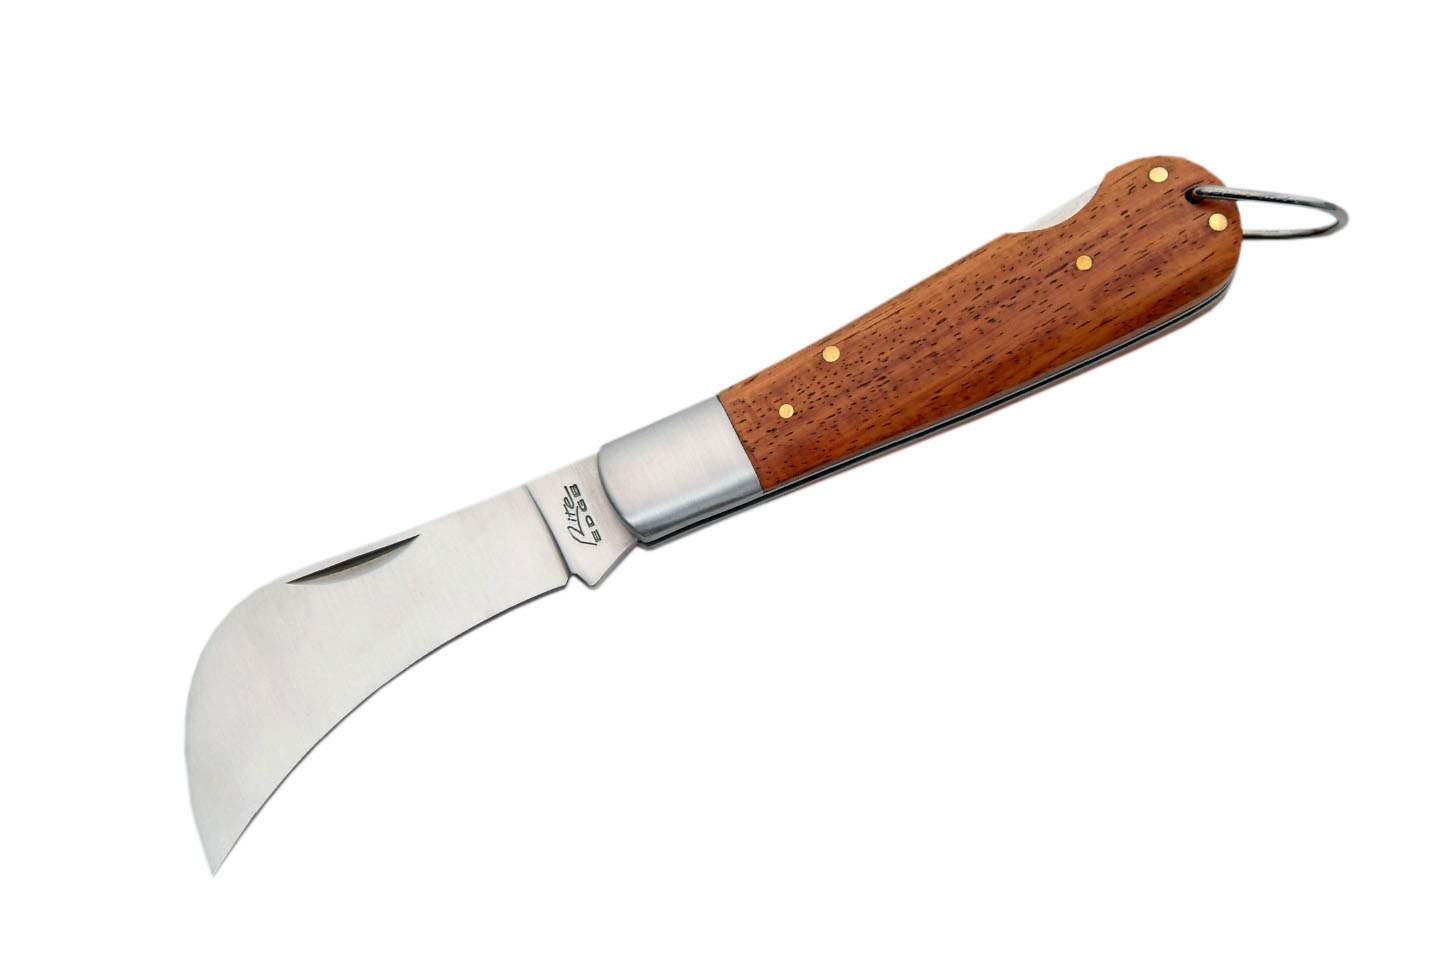 Folding Pocket Knife Hawkbill Blade Pruning Knife 4in Closed Wood Handle Lockback